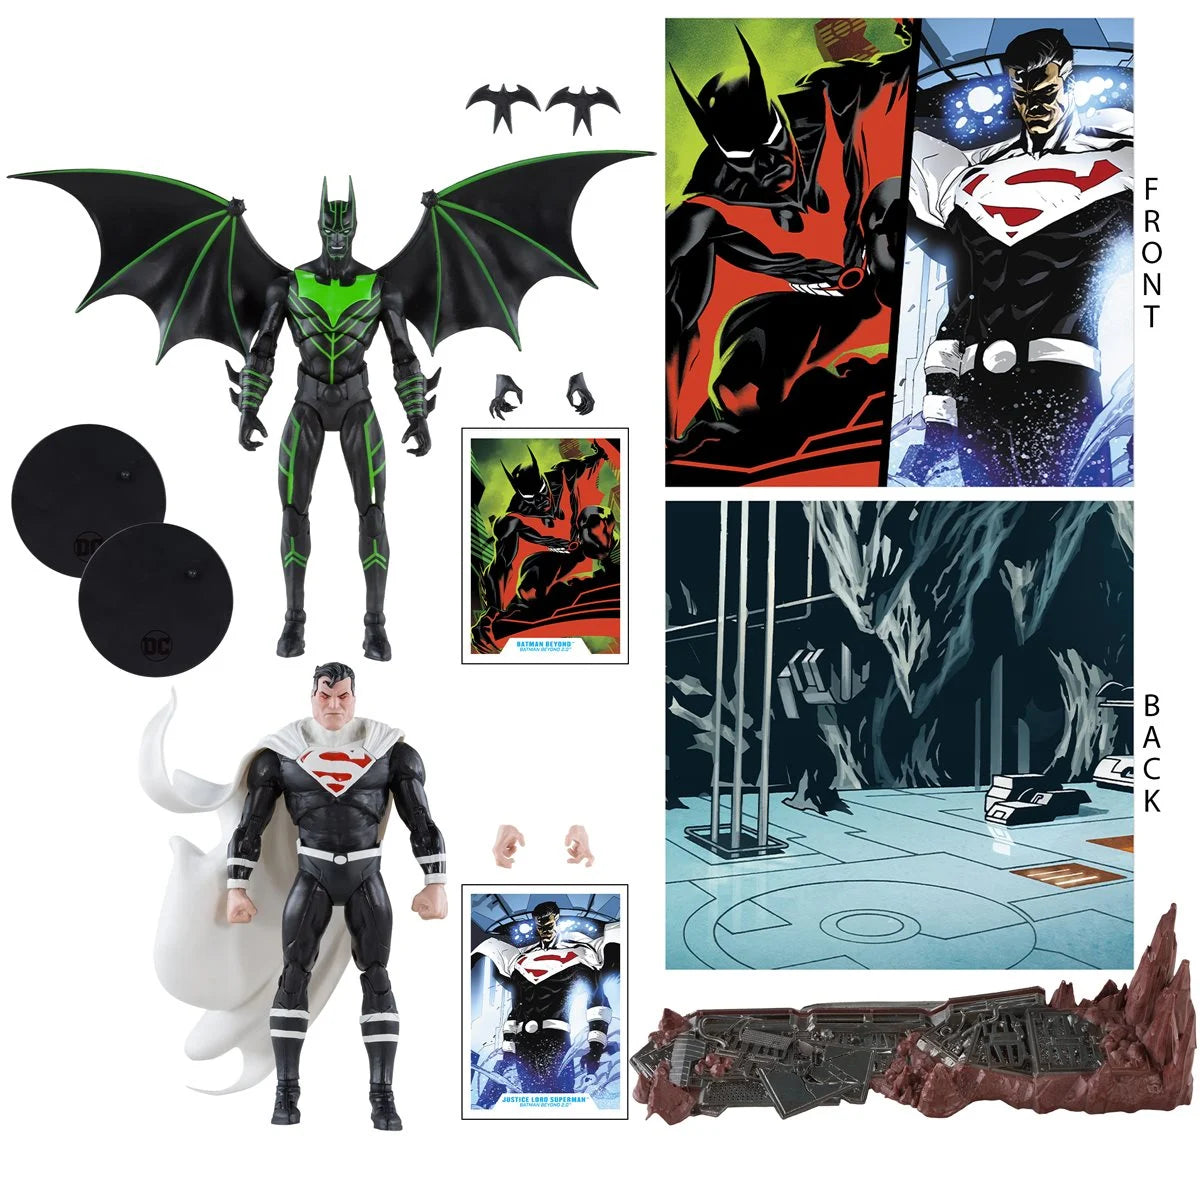 DC Multiverse Batman Beyond vs. Justice Lord Superman Action Figure 2-Pack